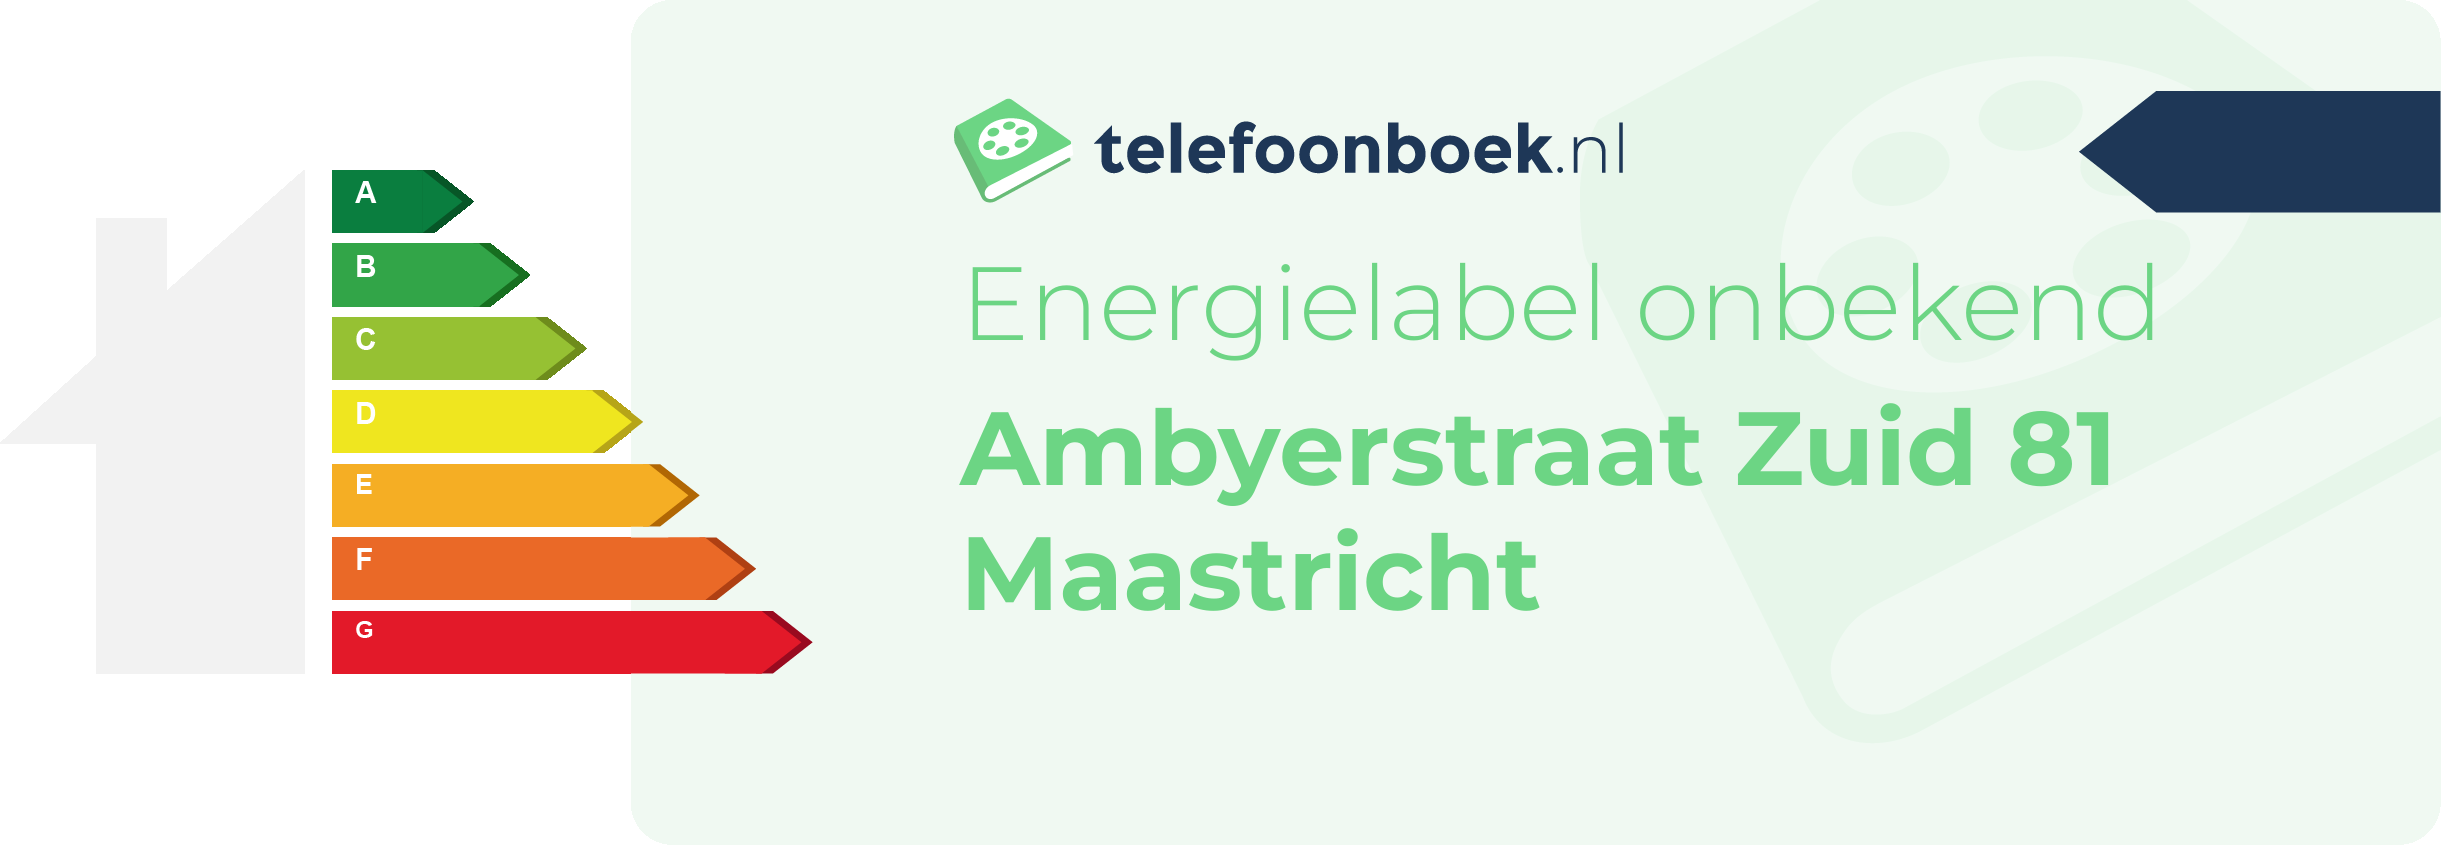 Energielabel Ambyerstraat Zuid 81 Maastricht